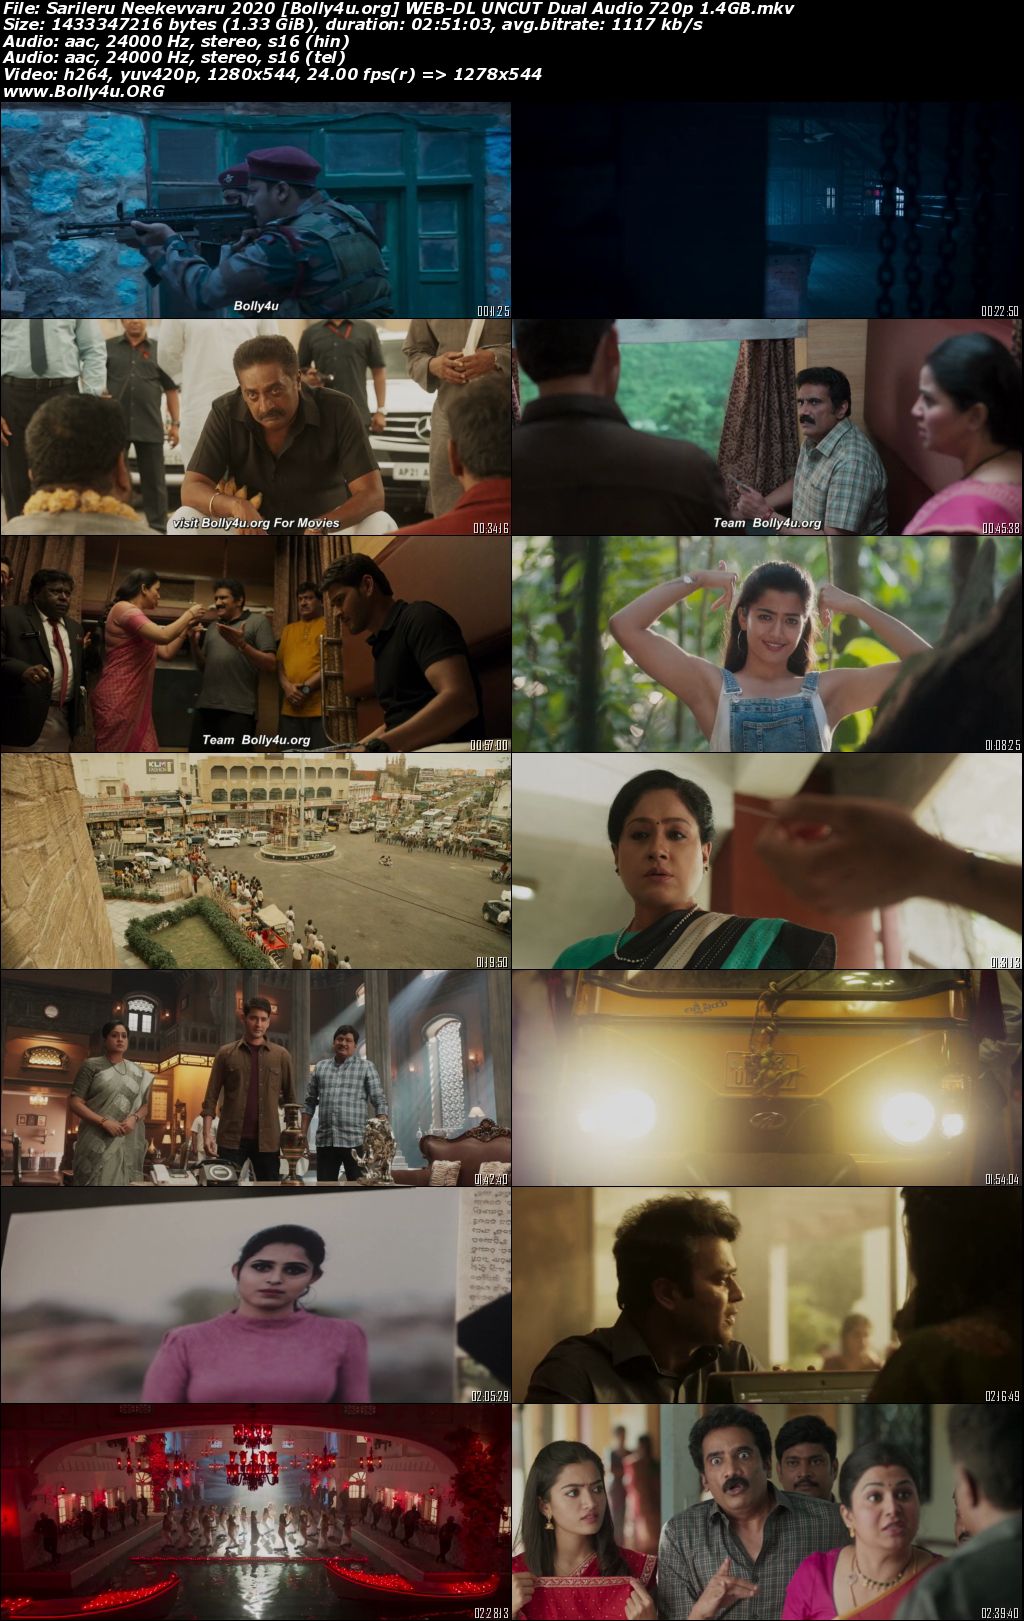 Sarileru Neekevvaru 2020 WEB-DL Hindi Dual Audio ORG Full Movie Download 1080p 720p 480p